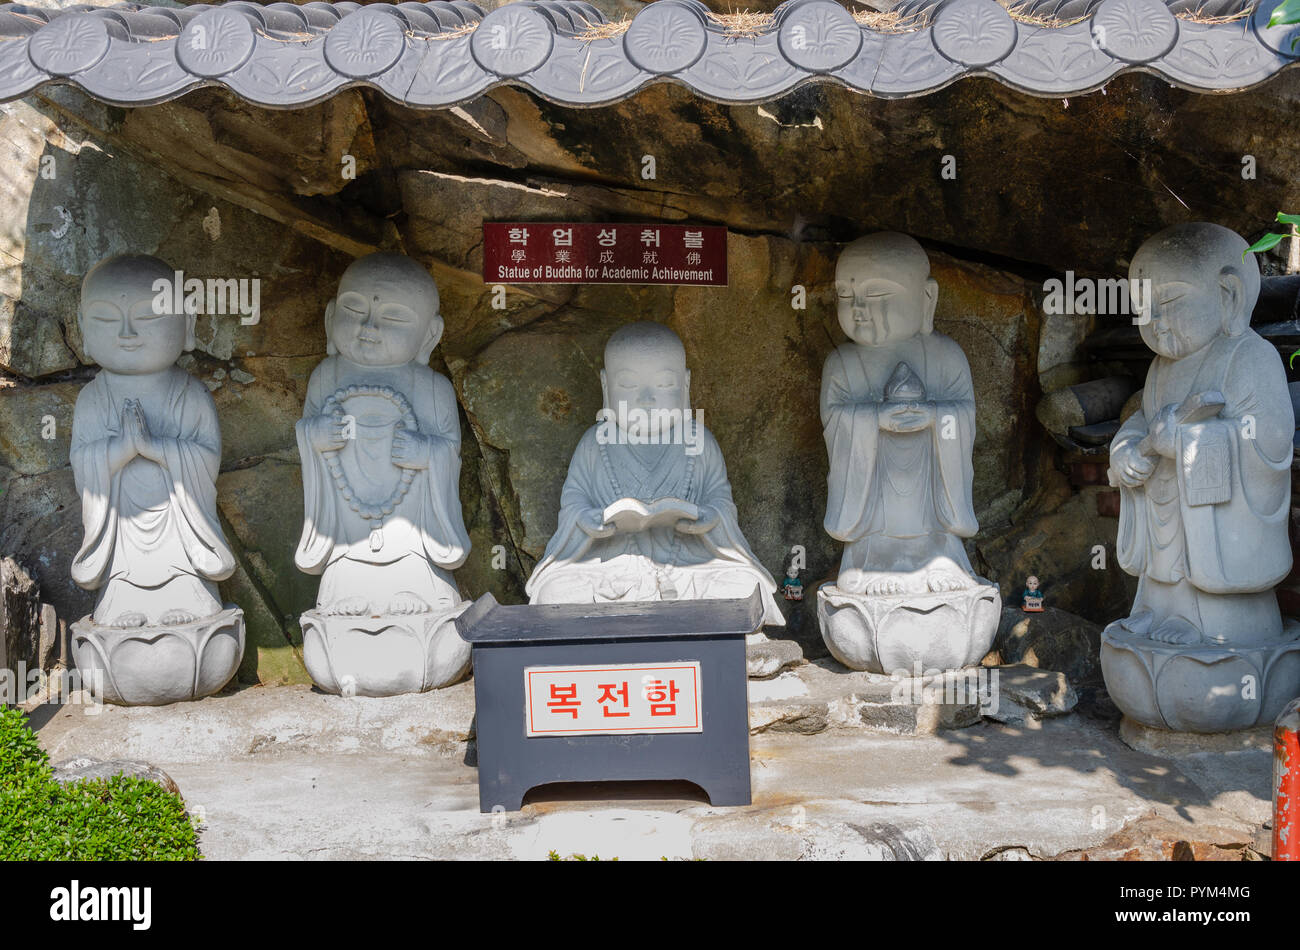 Statue of Buddha for Academic Achievement at Haedong Yonggungsa Temple in Busan, South Korea. Stock Photo